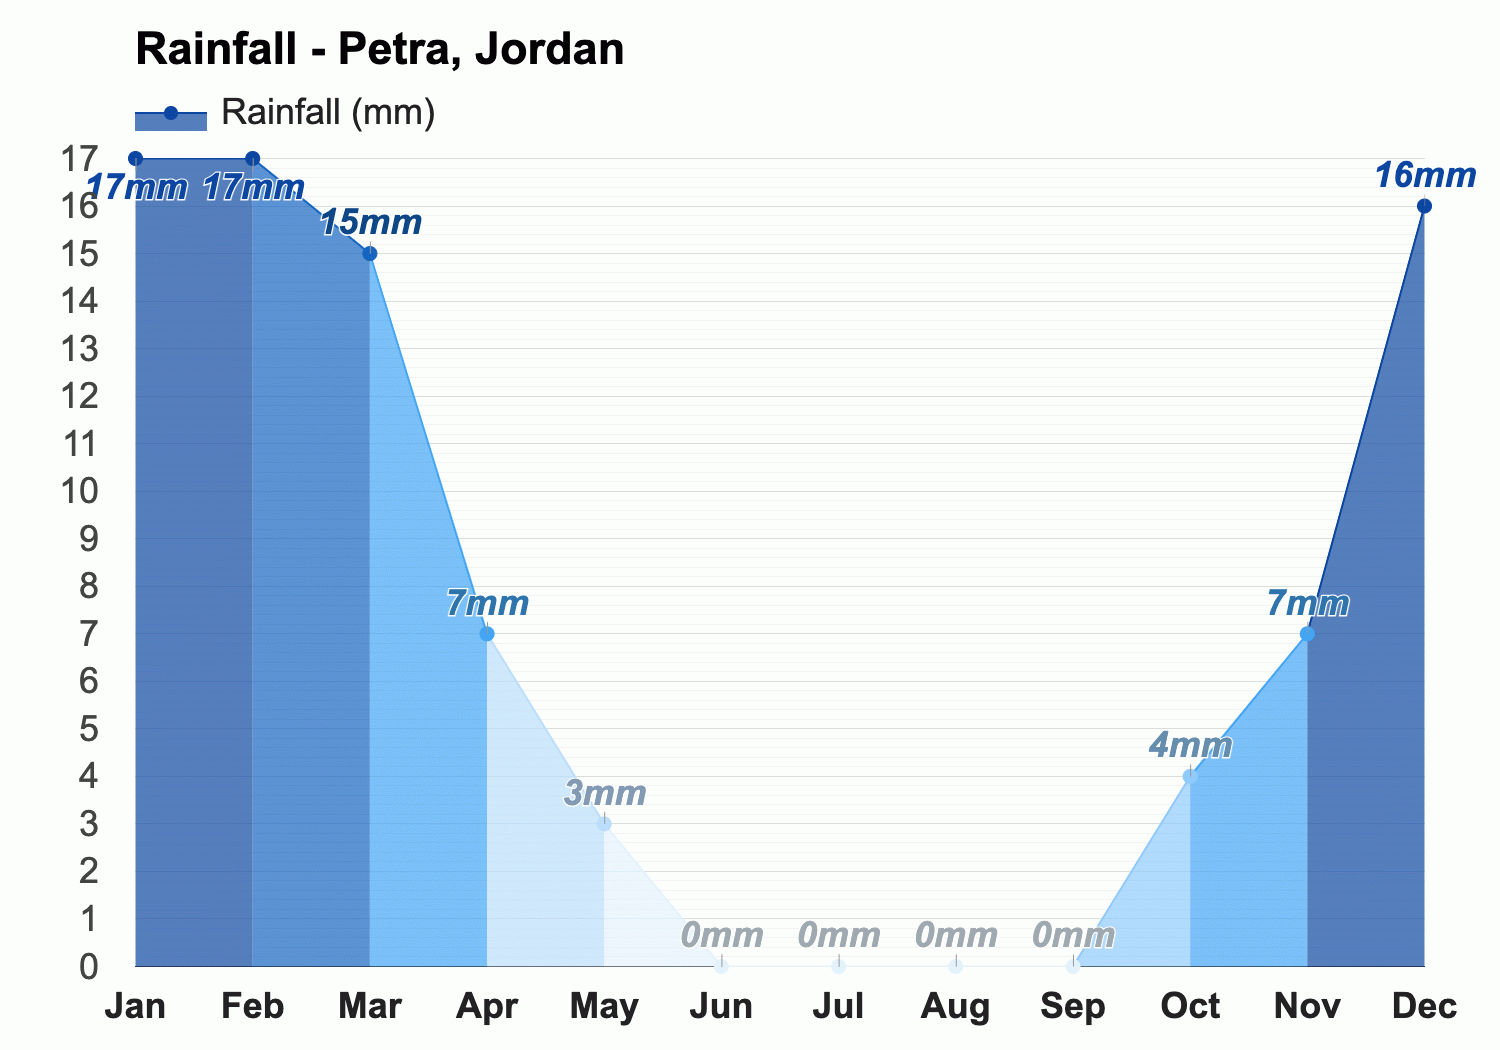 June Weather forecast - Summer forecast - Petra, Jordan